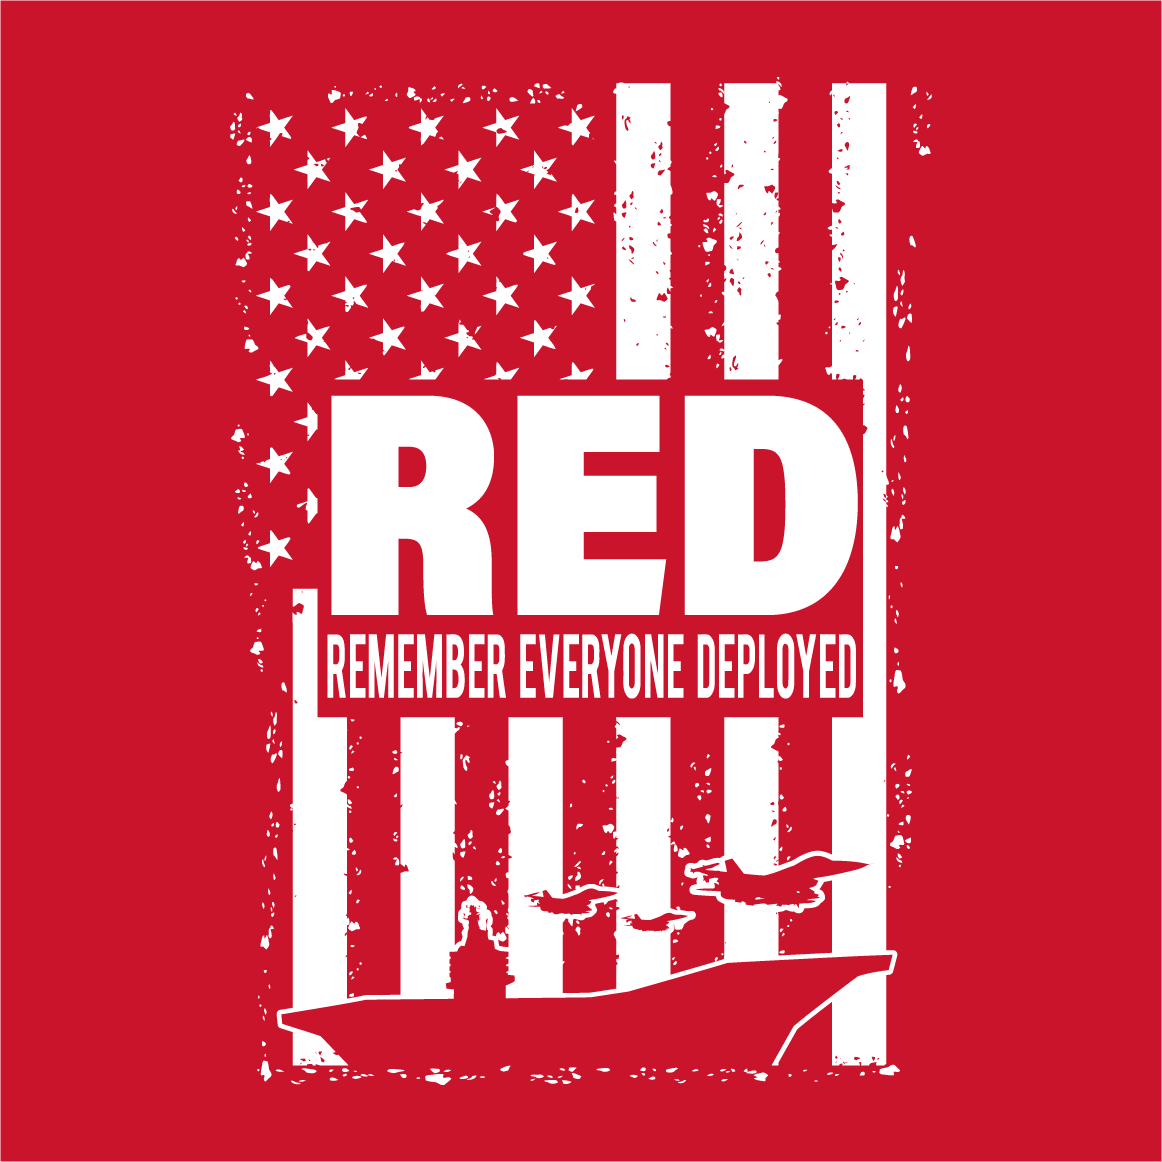 Truman RED Shirts shirt design - zoomed